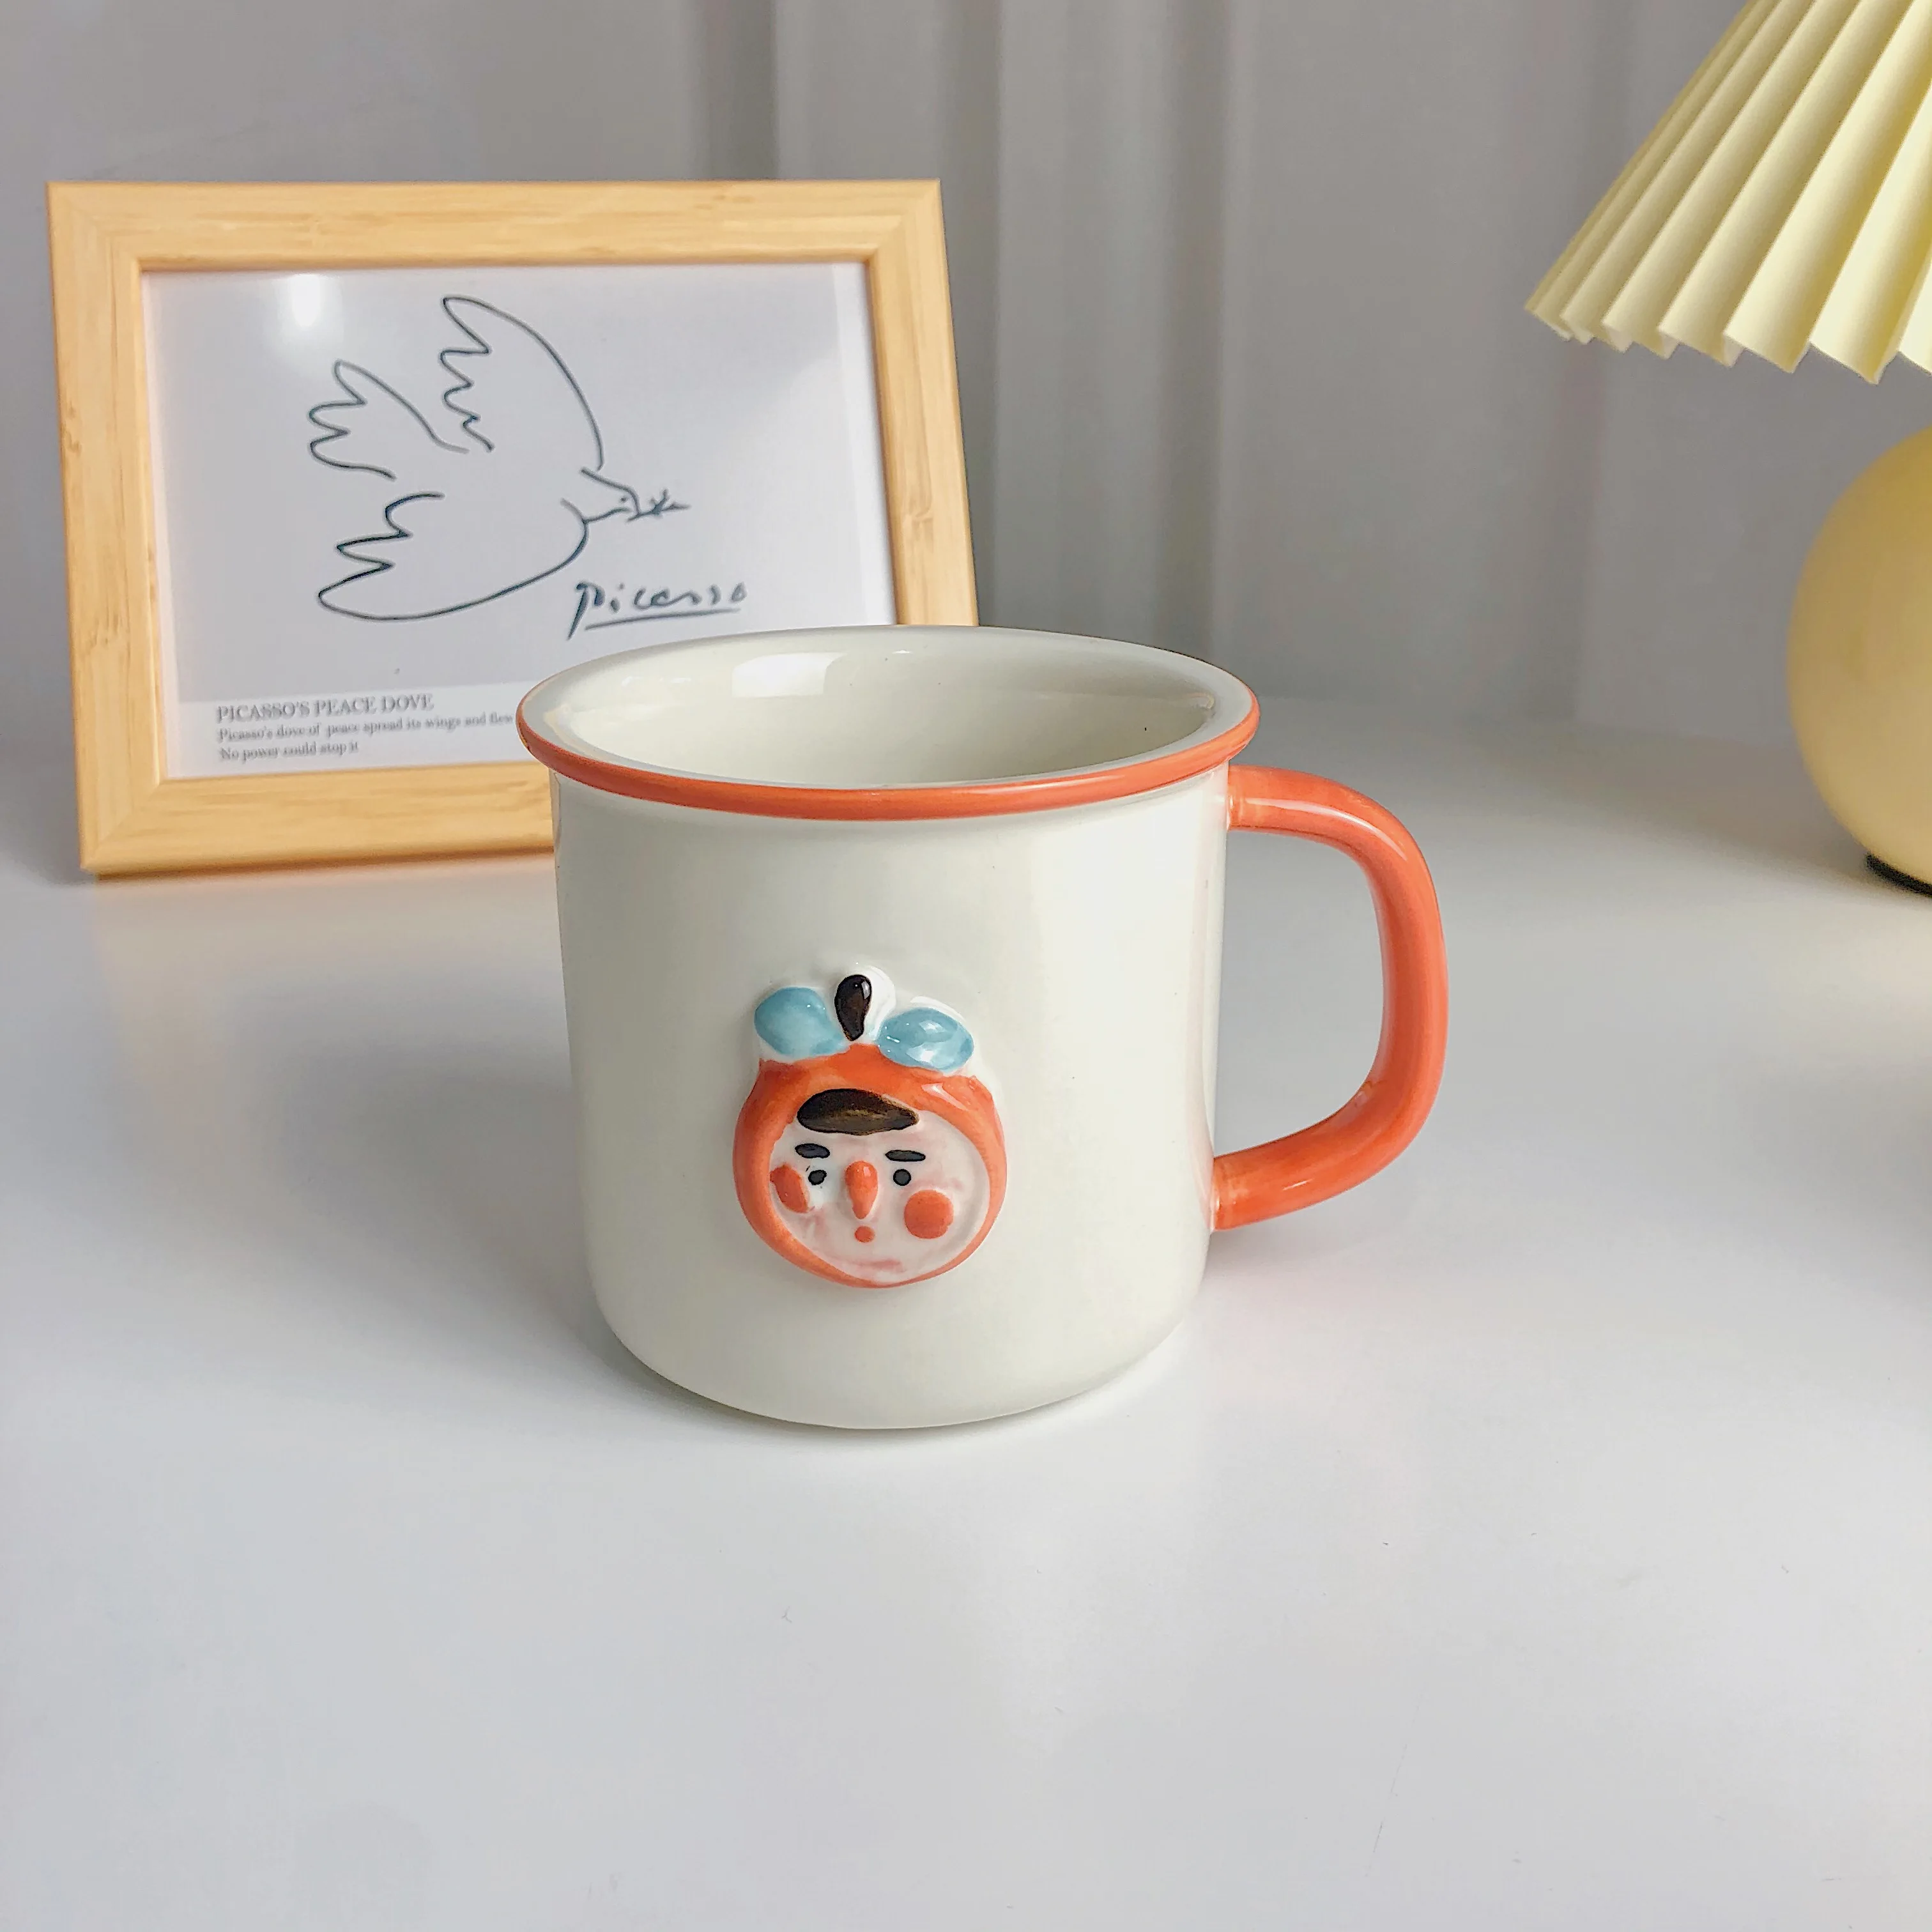 

Coffee Mug Travel Kawaii Cups Cup Mug for Tea Mugs Ceramic Coffe Cute Breakfast Cofee Drinkware Kitchen Dining Bar Home Garden